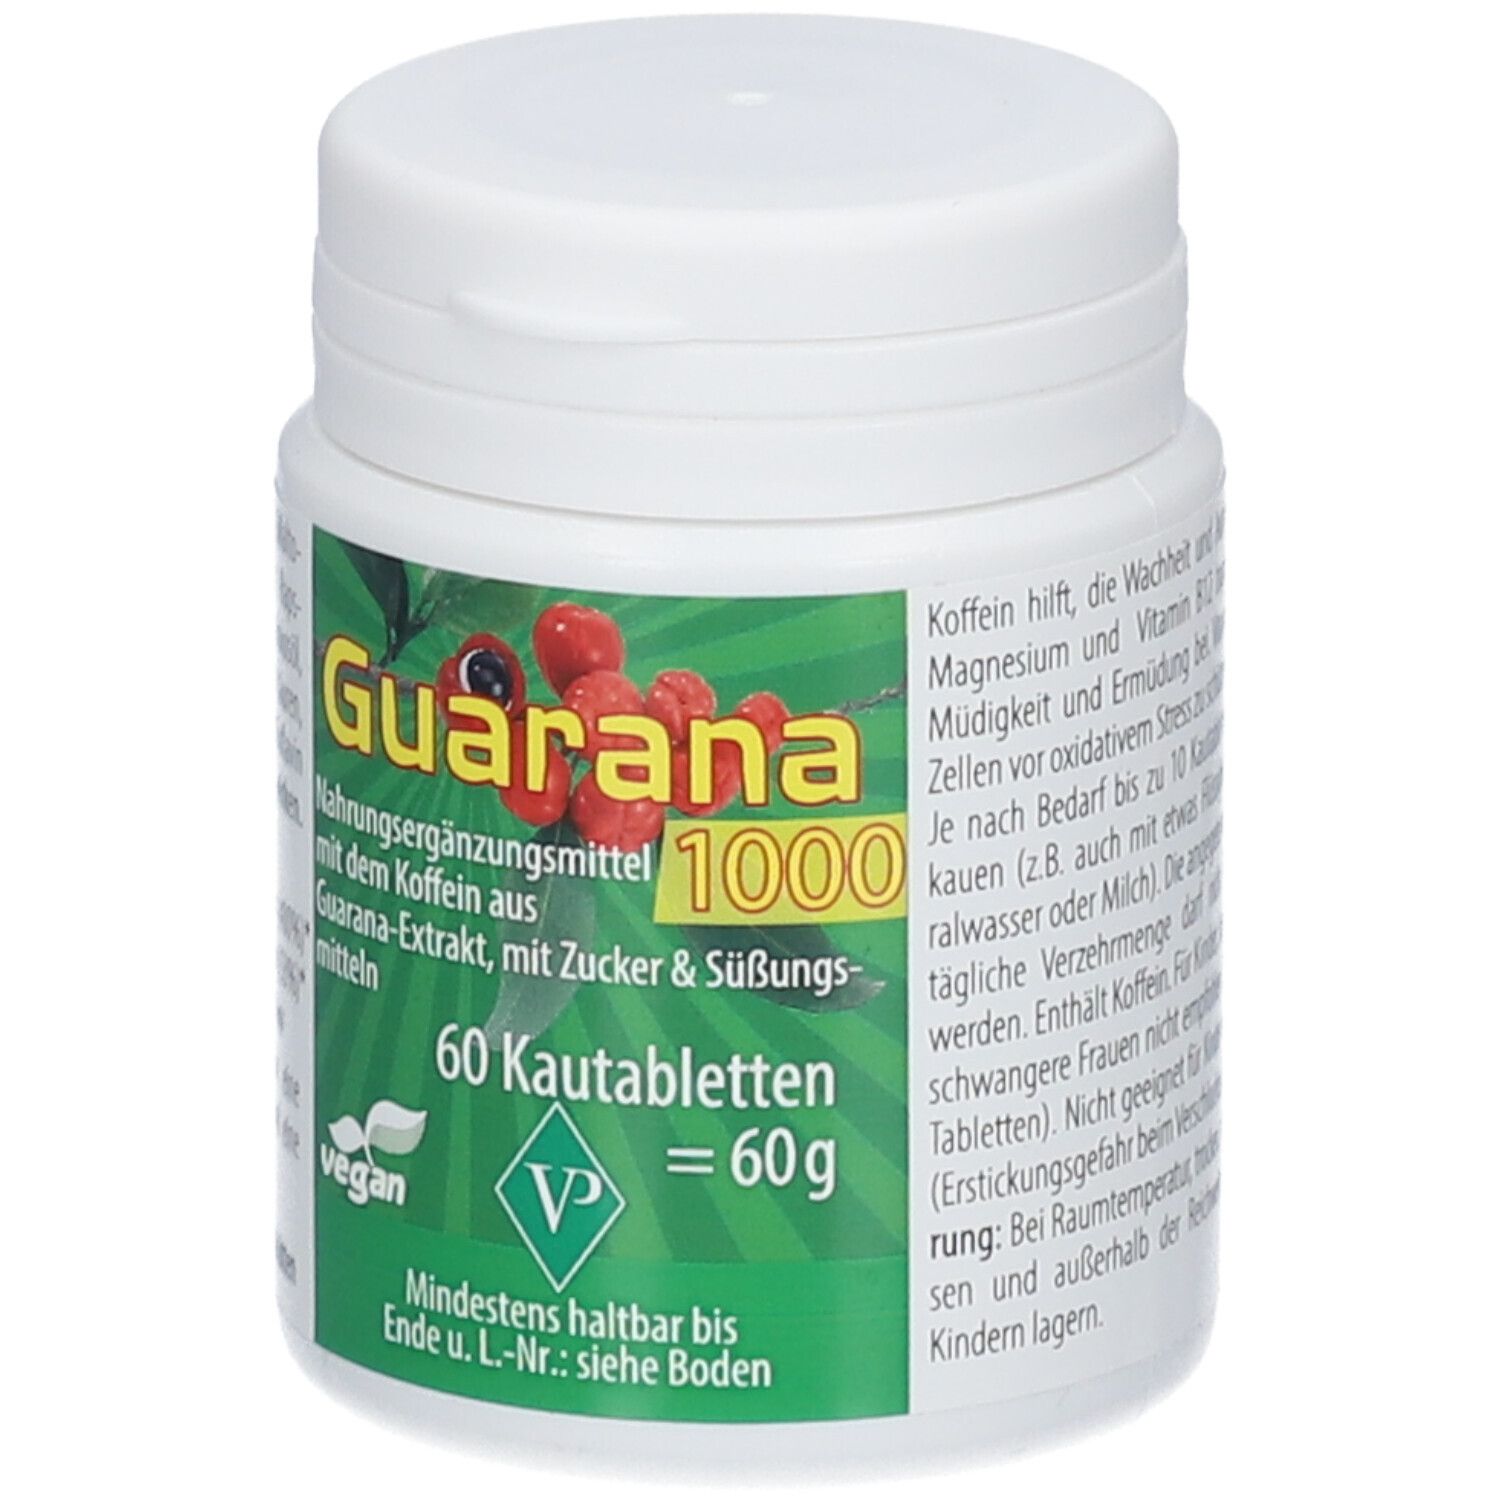 Guarana 1000